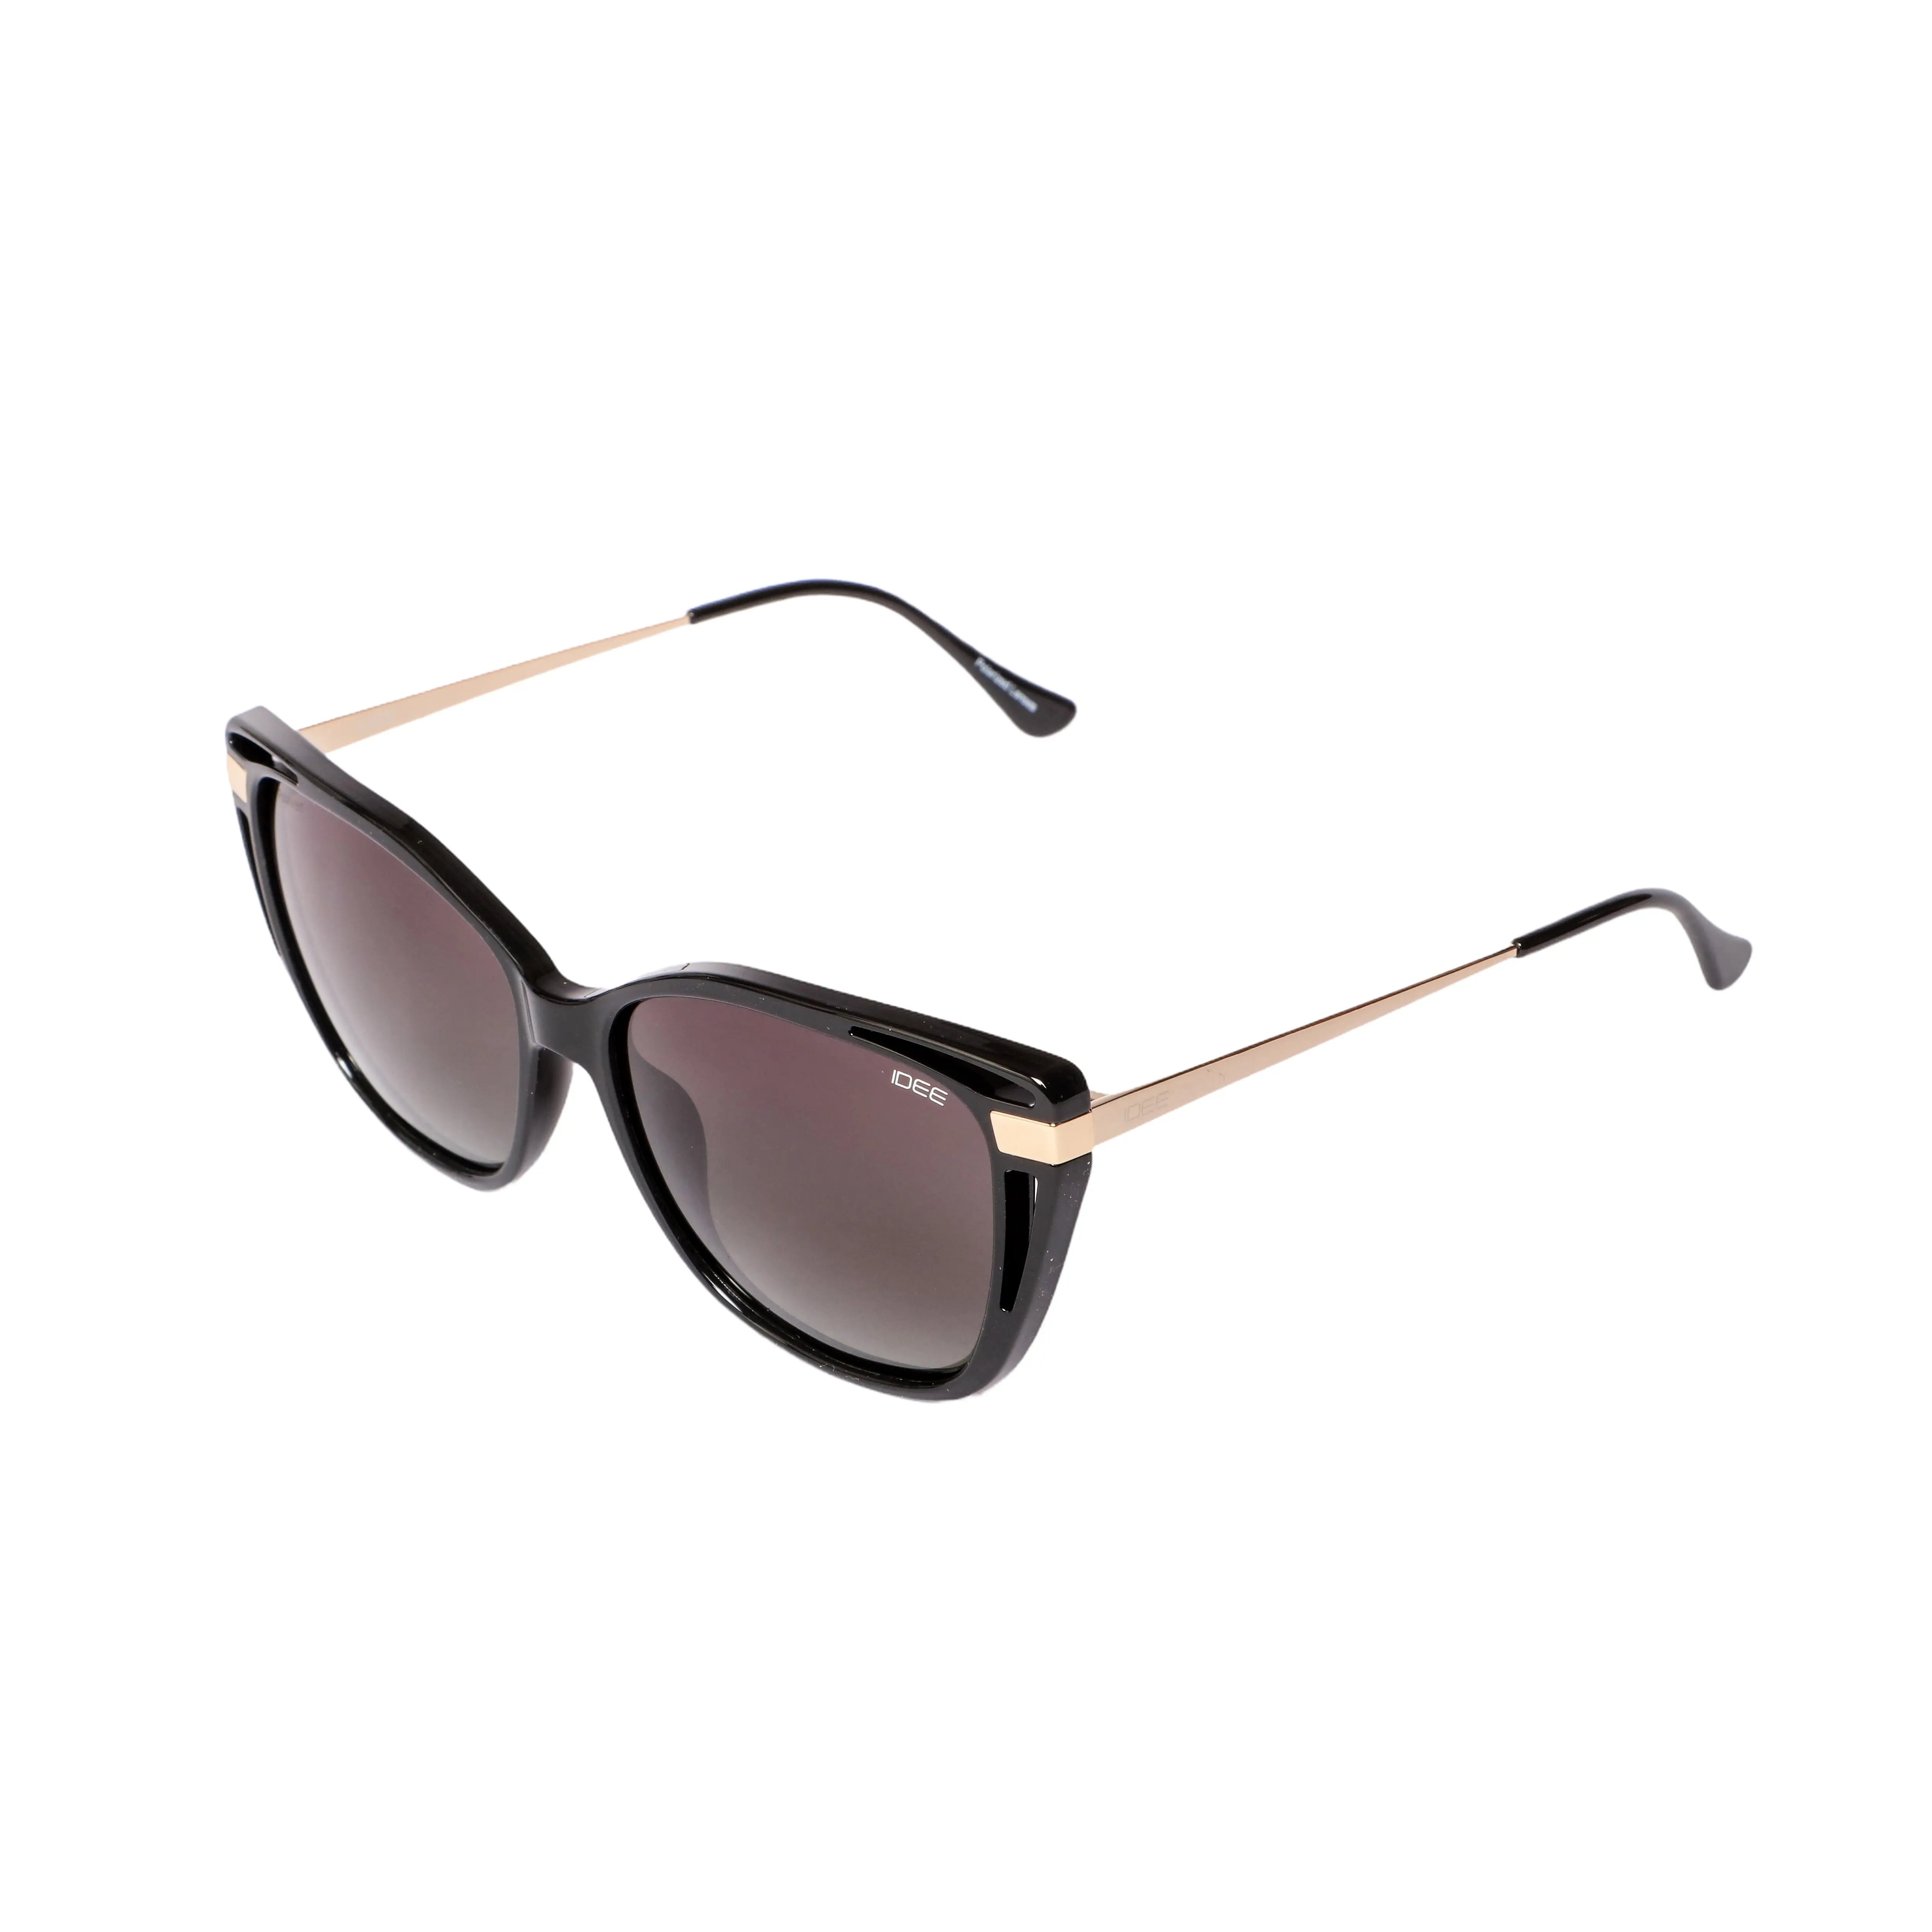 IDEE-S3016--C1 Sunglasses - Premium Sunglasses from IDEE - Just Rs. 3740! Shop now at Laxmi Opticians